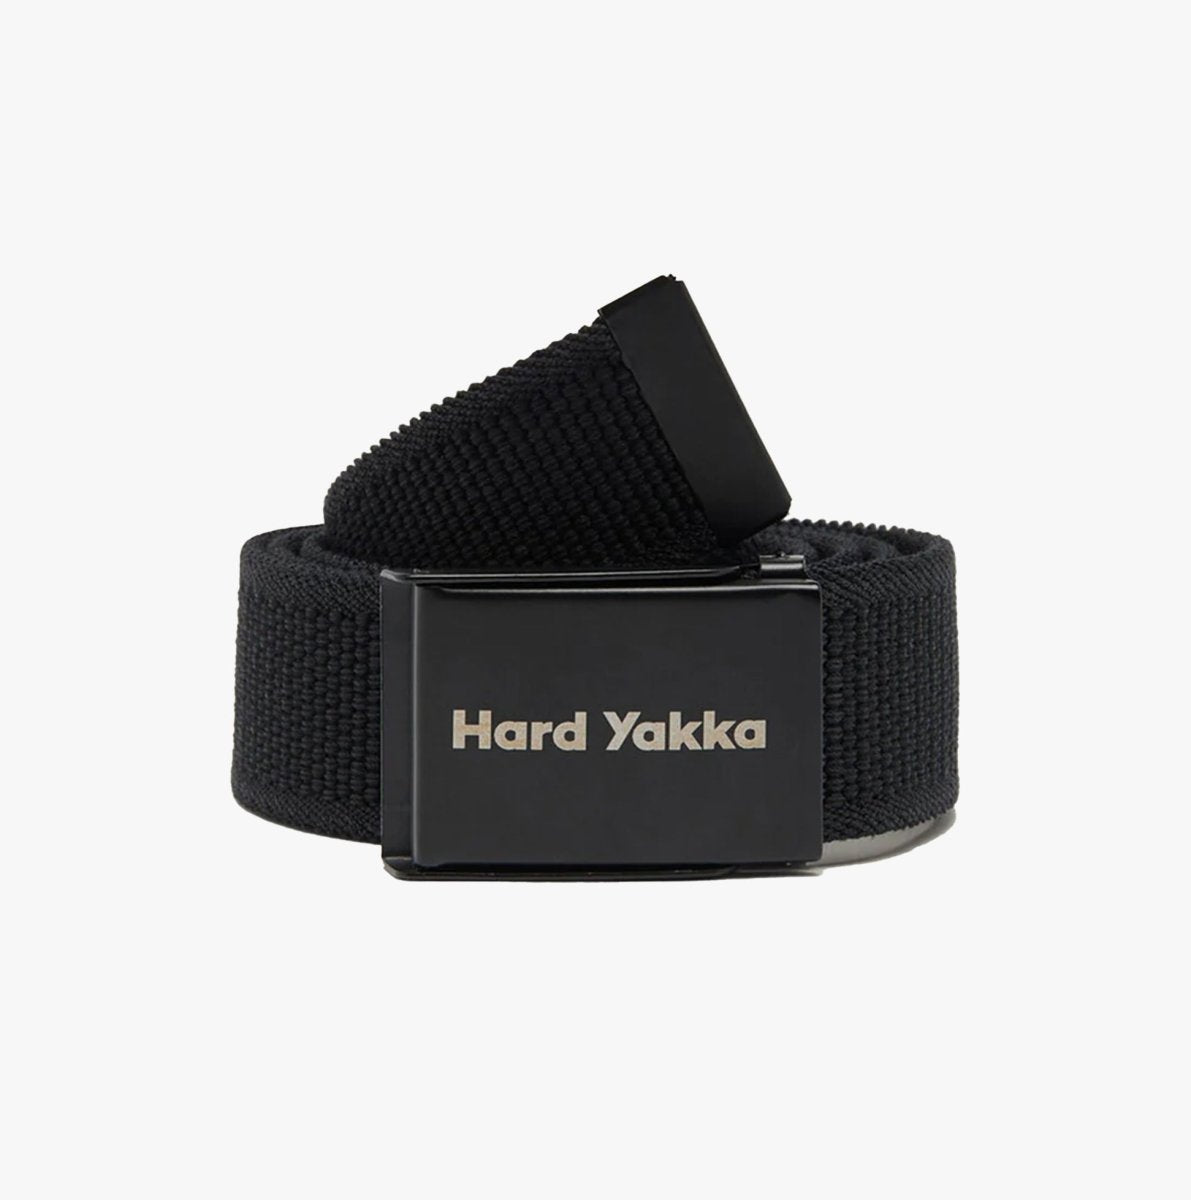 Hard Yakka STRETCH WEBBING BELT Unisex Black 36854 - 68869 - 03 | STB.co.uk